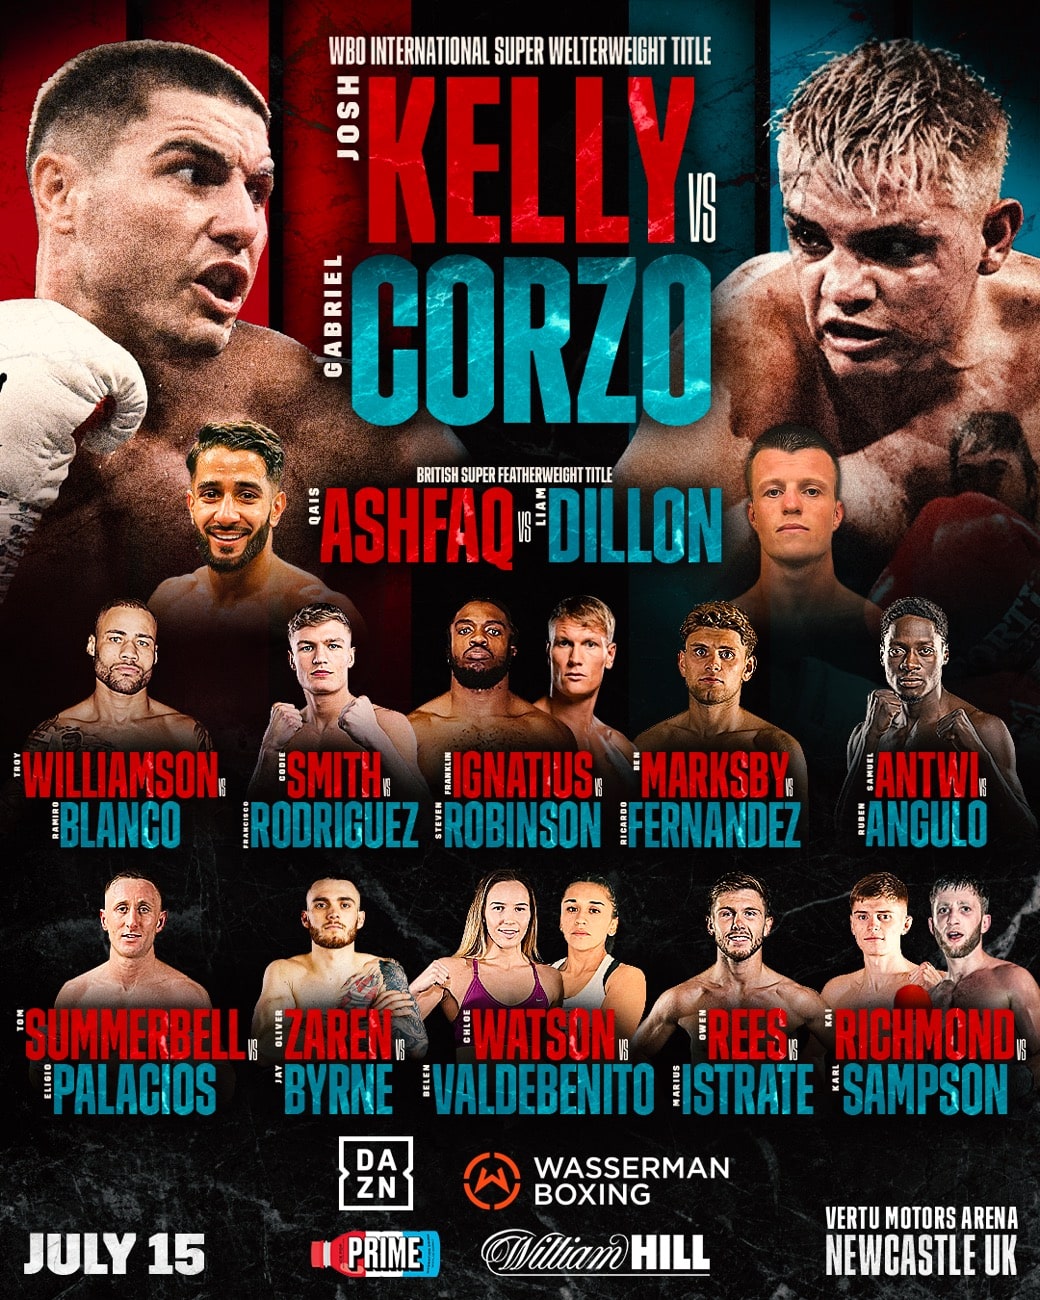 Image: Boxing Tonight: Kelly vs Corzo - Start Time, Undercard Info